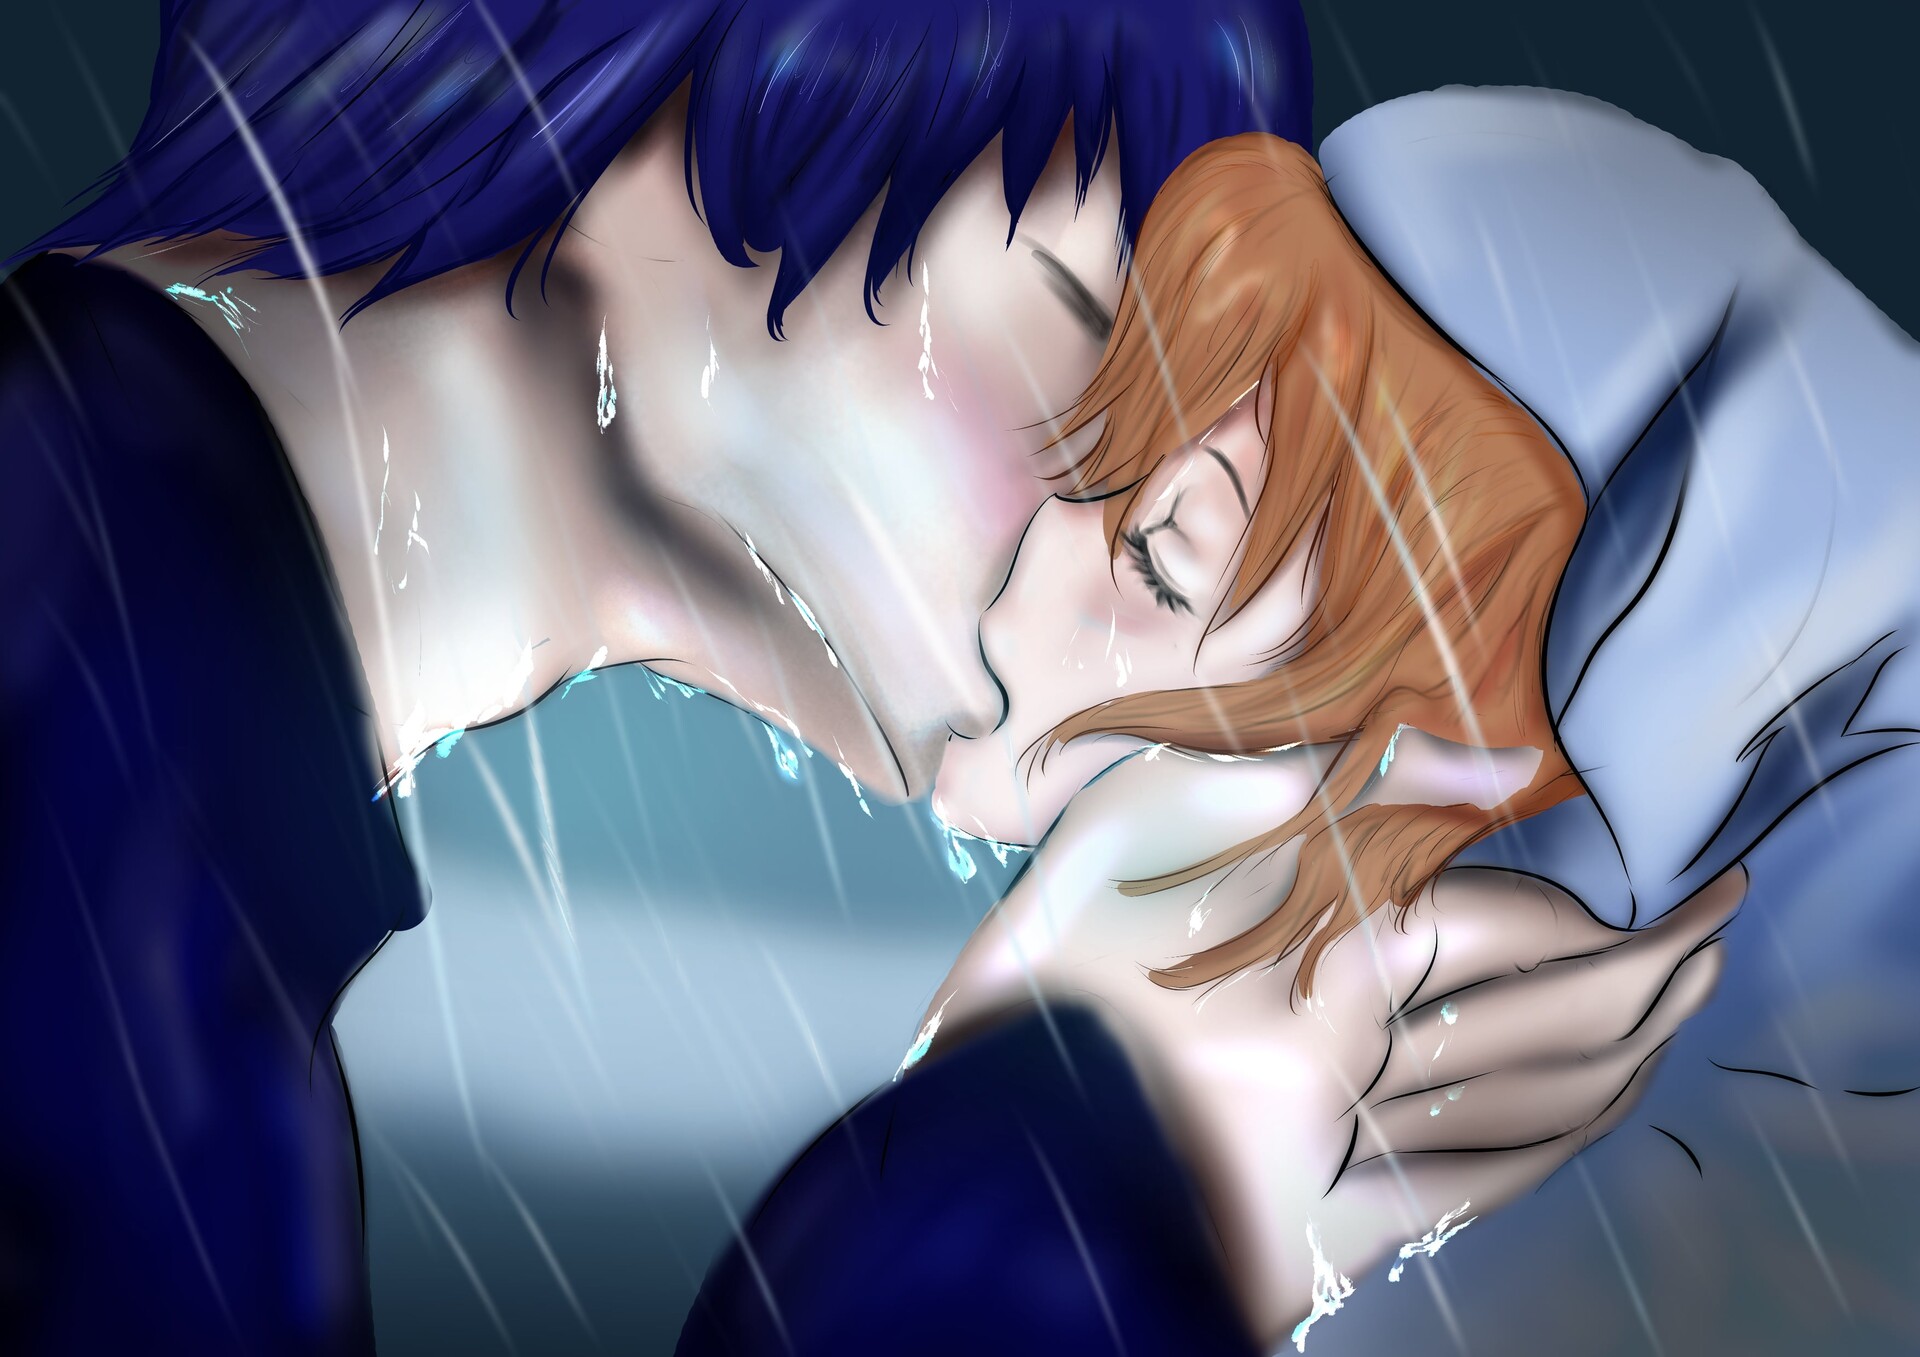 ArtStation - Toradora kiss in the rain